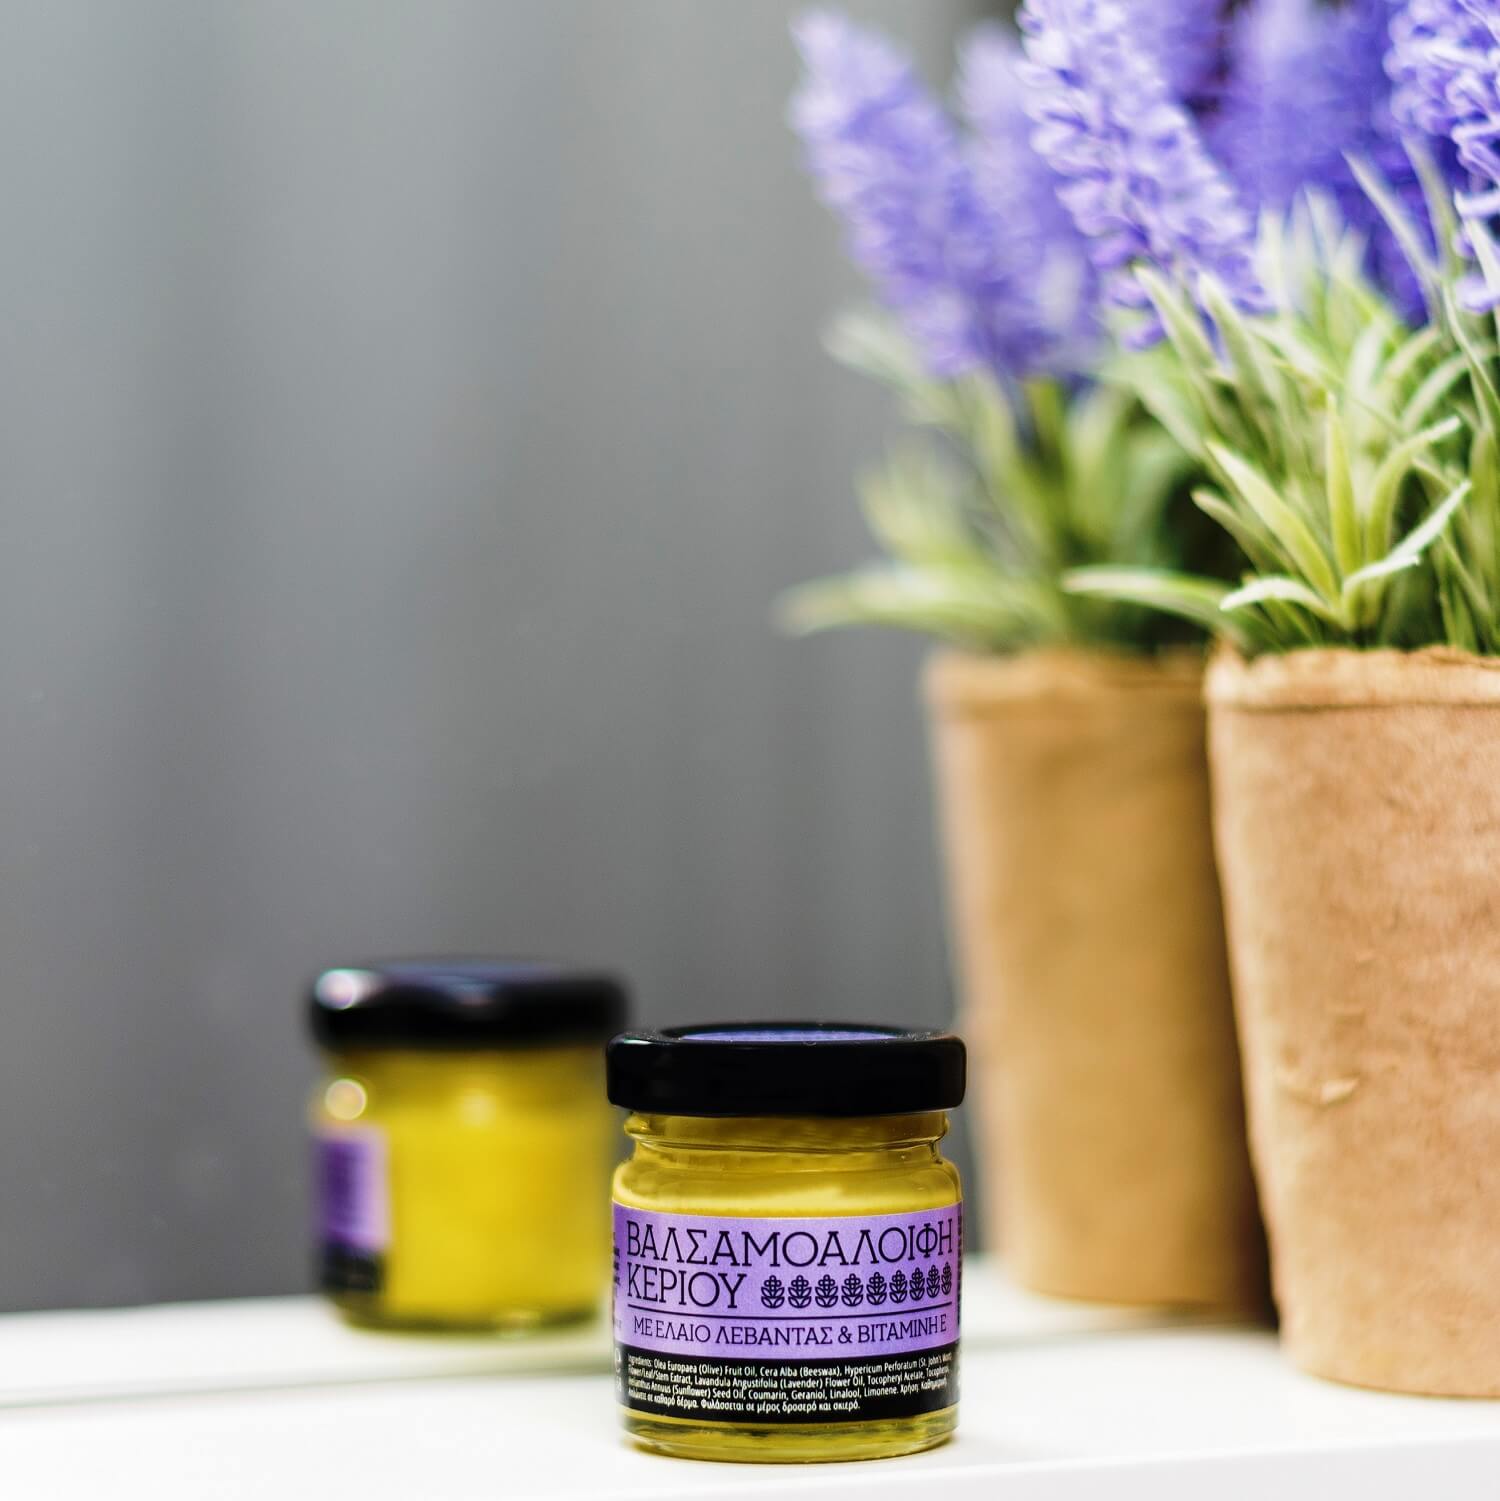 St. John’s wort oil wax cream lavender oil vitamin E natural cosmetics 100 made in Greece parabens sls